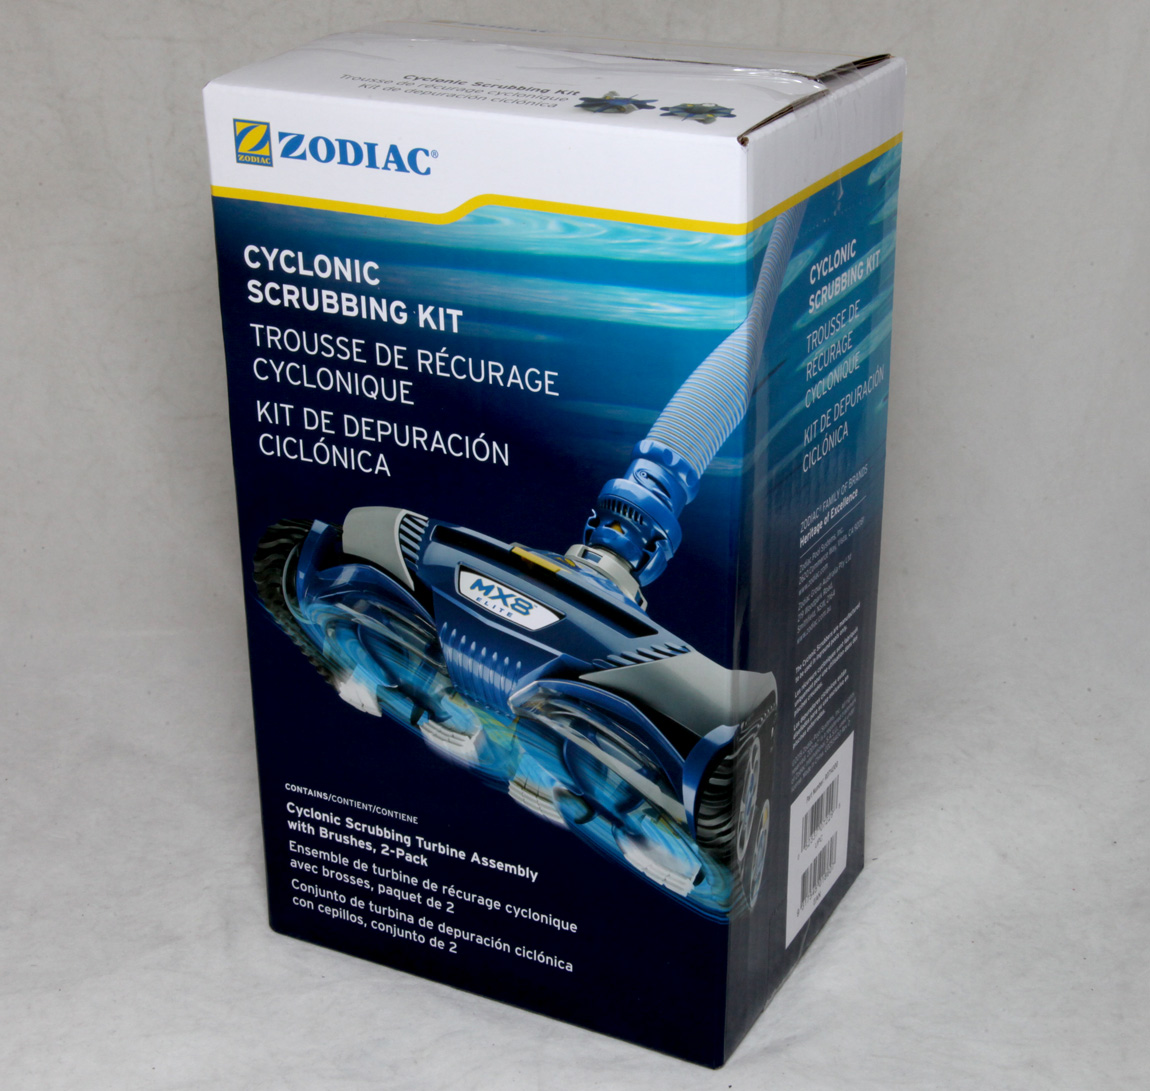 Cyclonic Scrubbing Kit R0714300 For ZODIAC Robotic Pool Cleaner MX8 & MX8 Elite